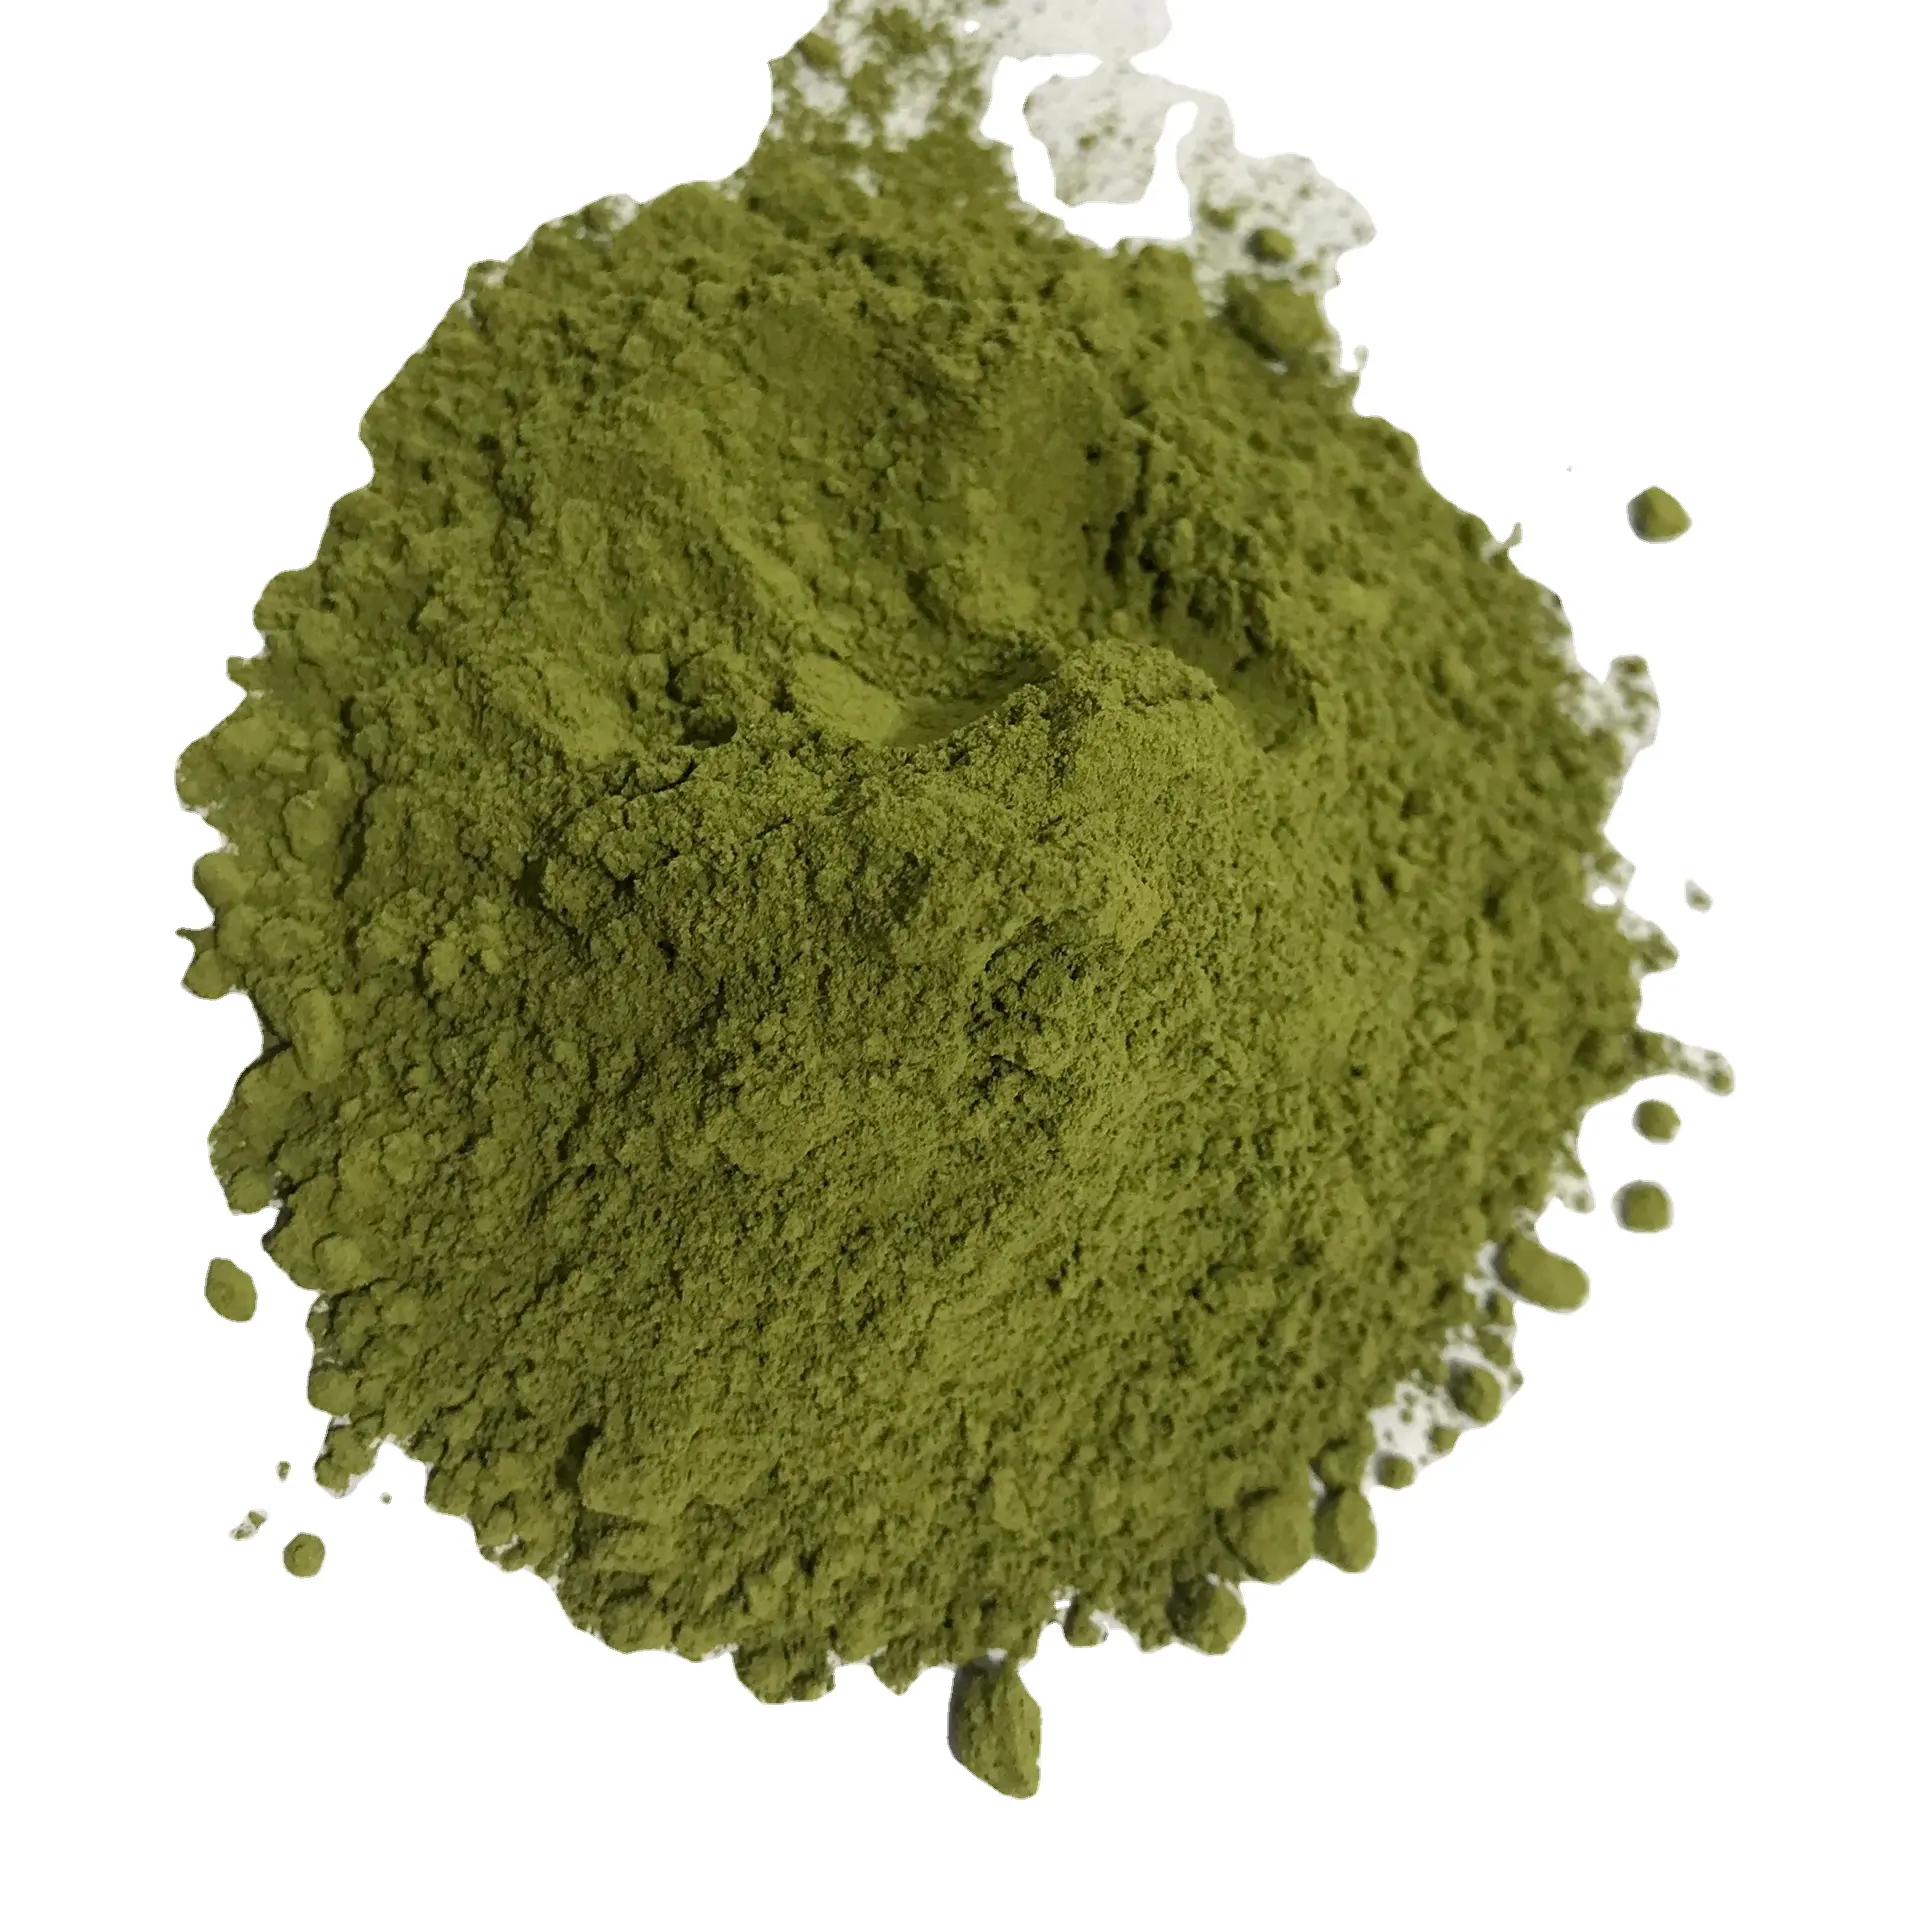 Organic moringa powder|Pure moringa powder\Vegan moringa powder from Vietnam